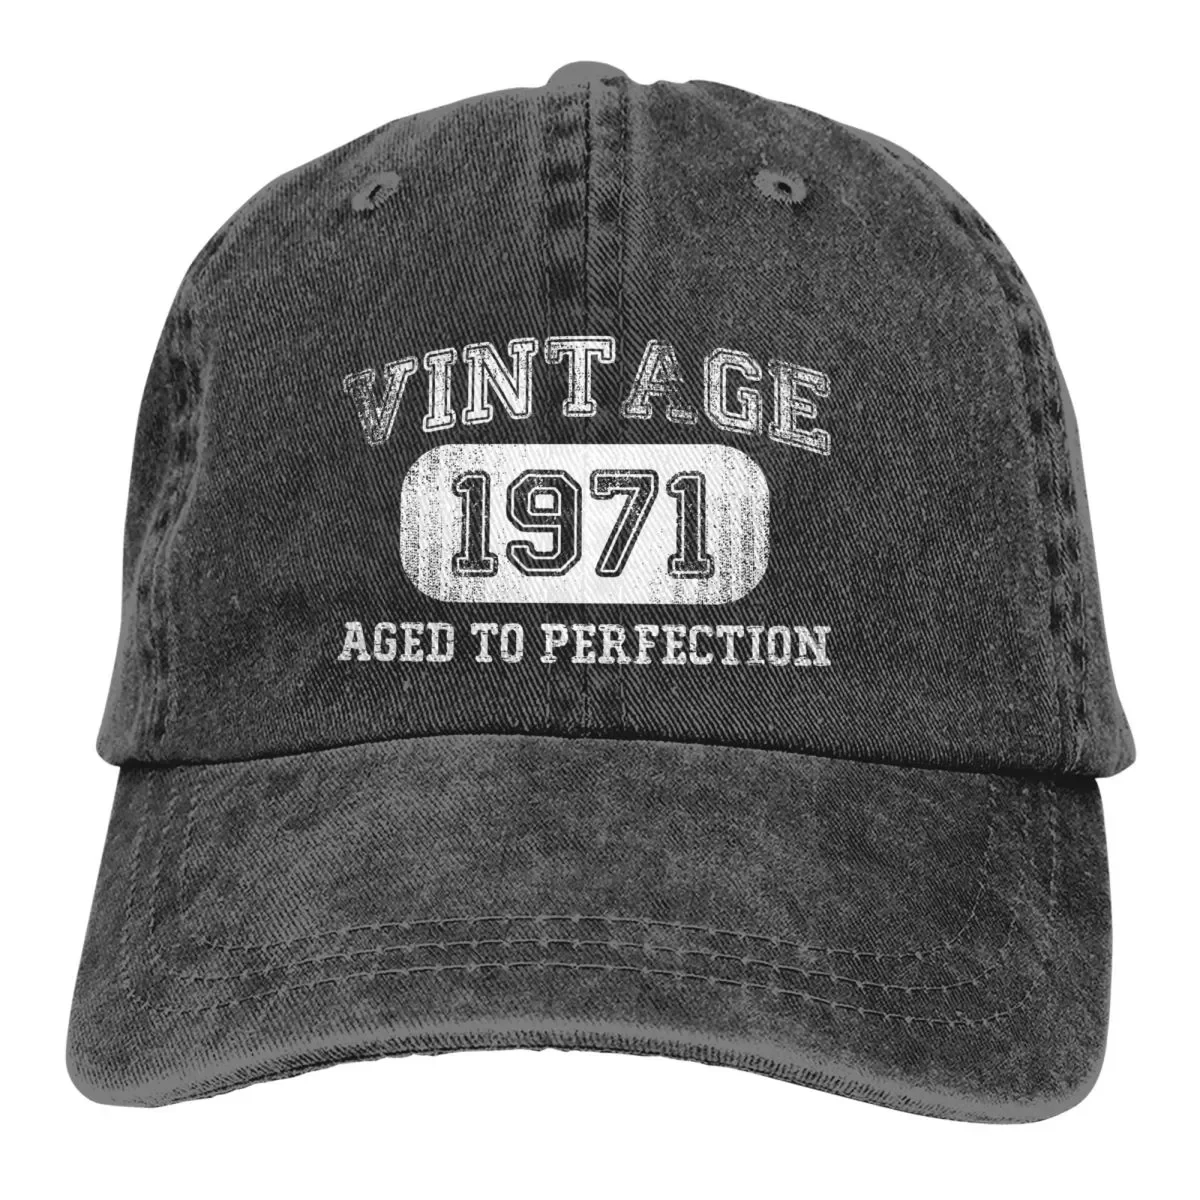 

New Pure Color Dad Hats White Women's Hat Sun Visor Baseball Caps Vintage 1971 Culture Peaked Cap